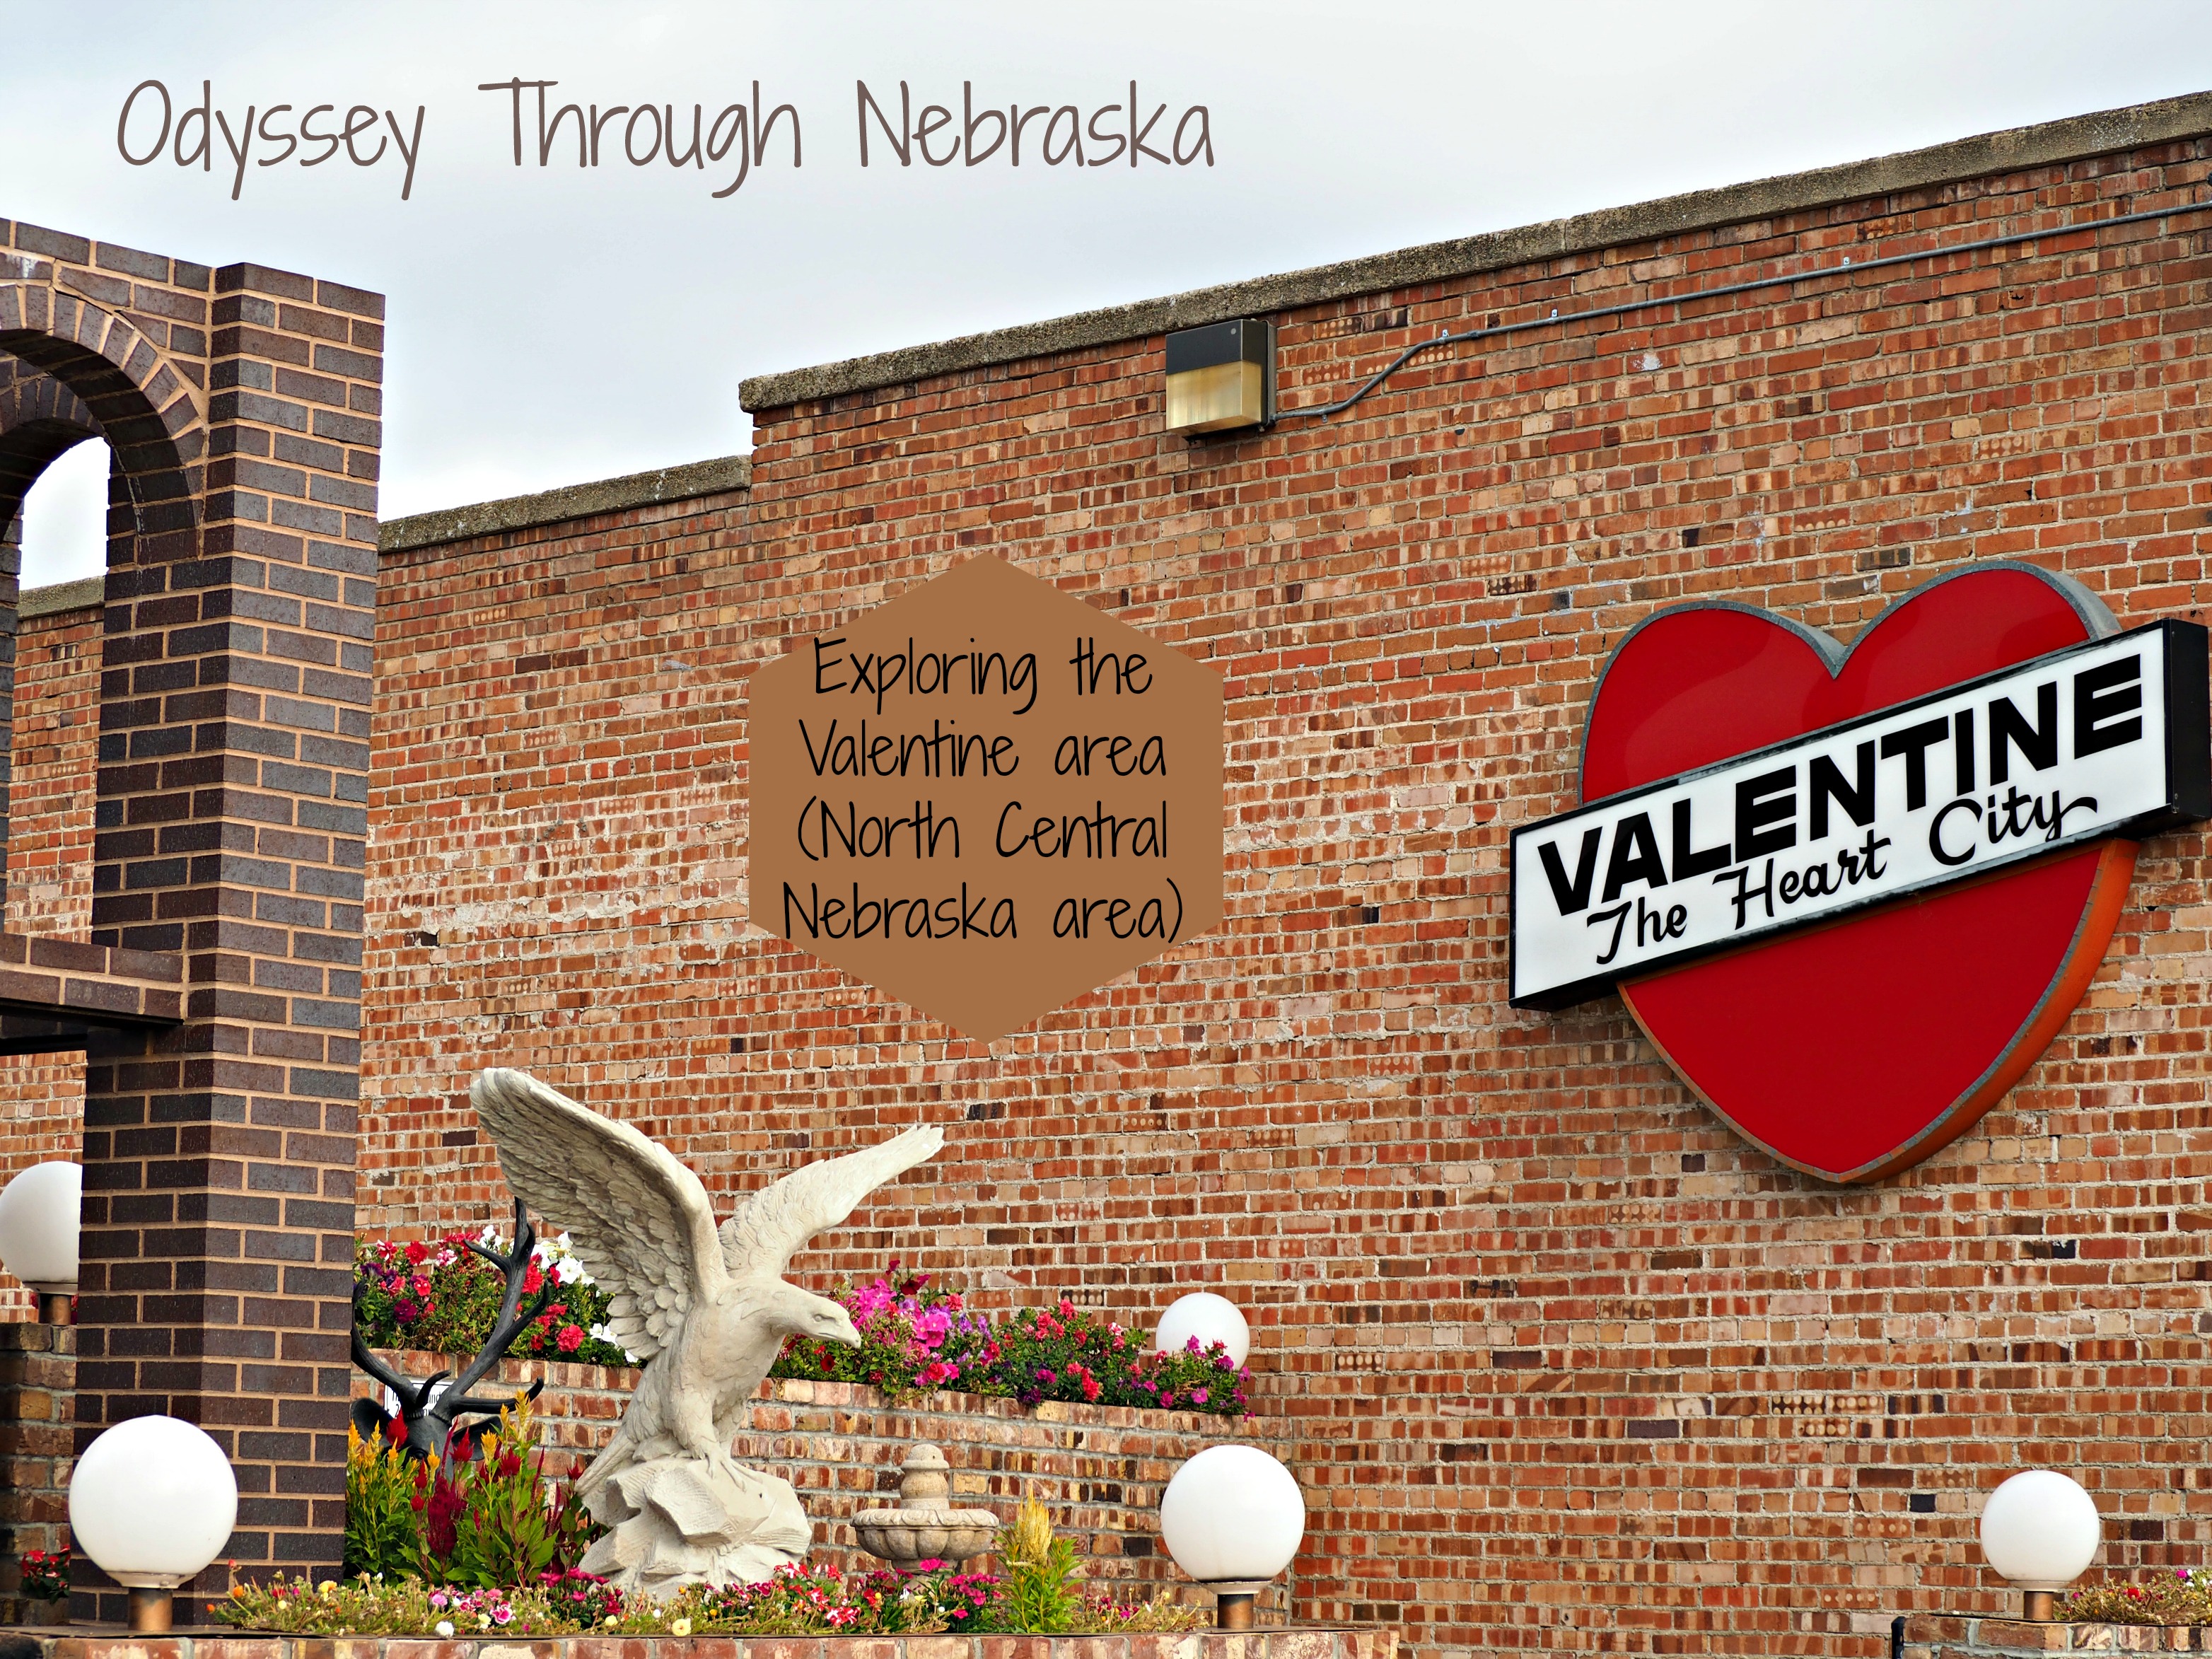 Valentine is Nebraska's heart city. Explore the town and surrounding area.